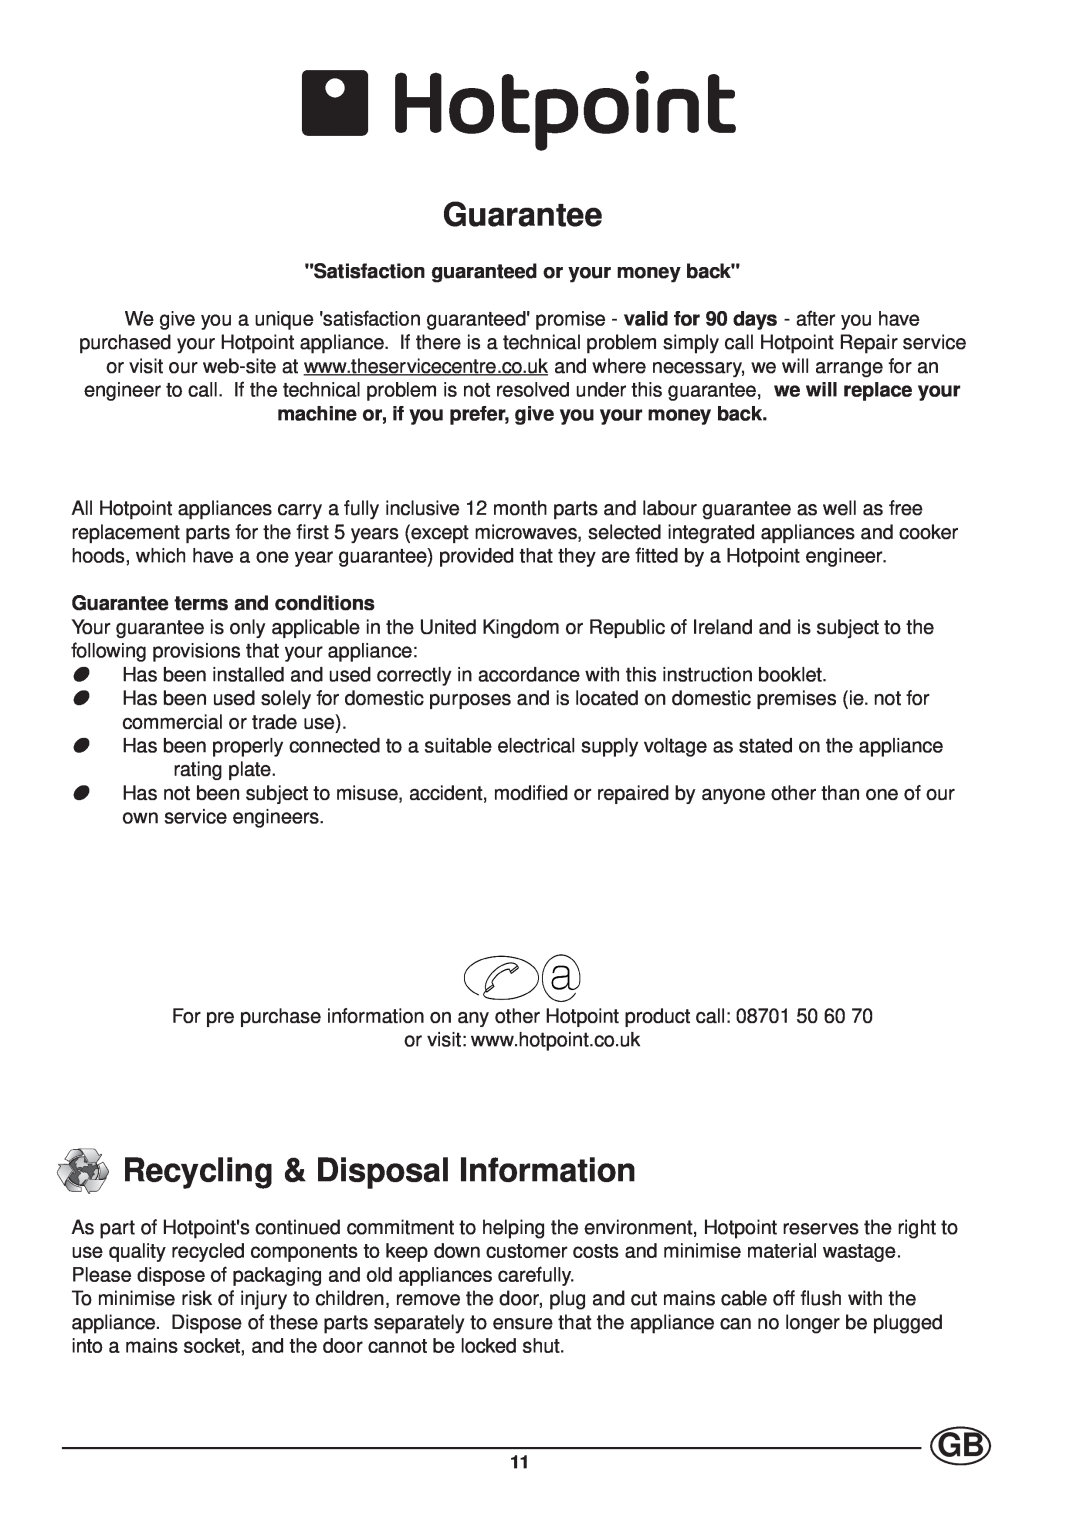 Hotpoint EC6011 - EC6014 manual Guarantee, Recycling & Disposal Information, Satisfaction guaranteed or your money back 